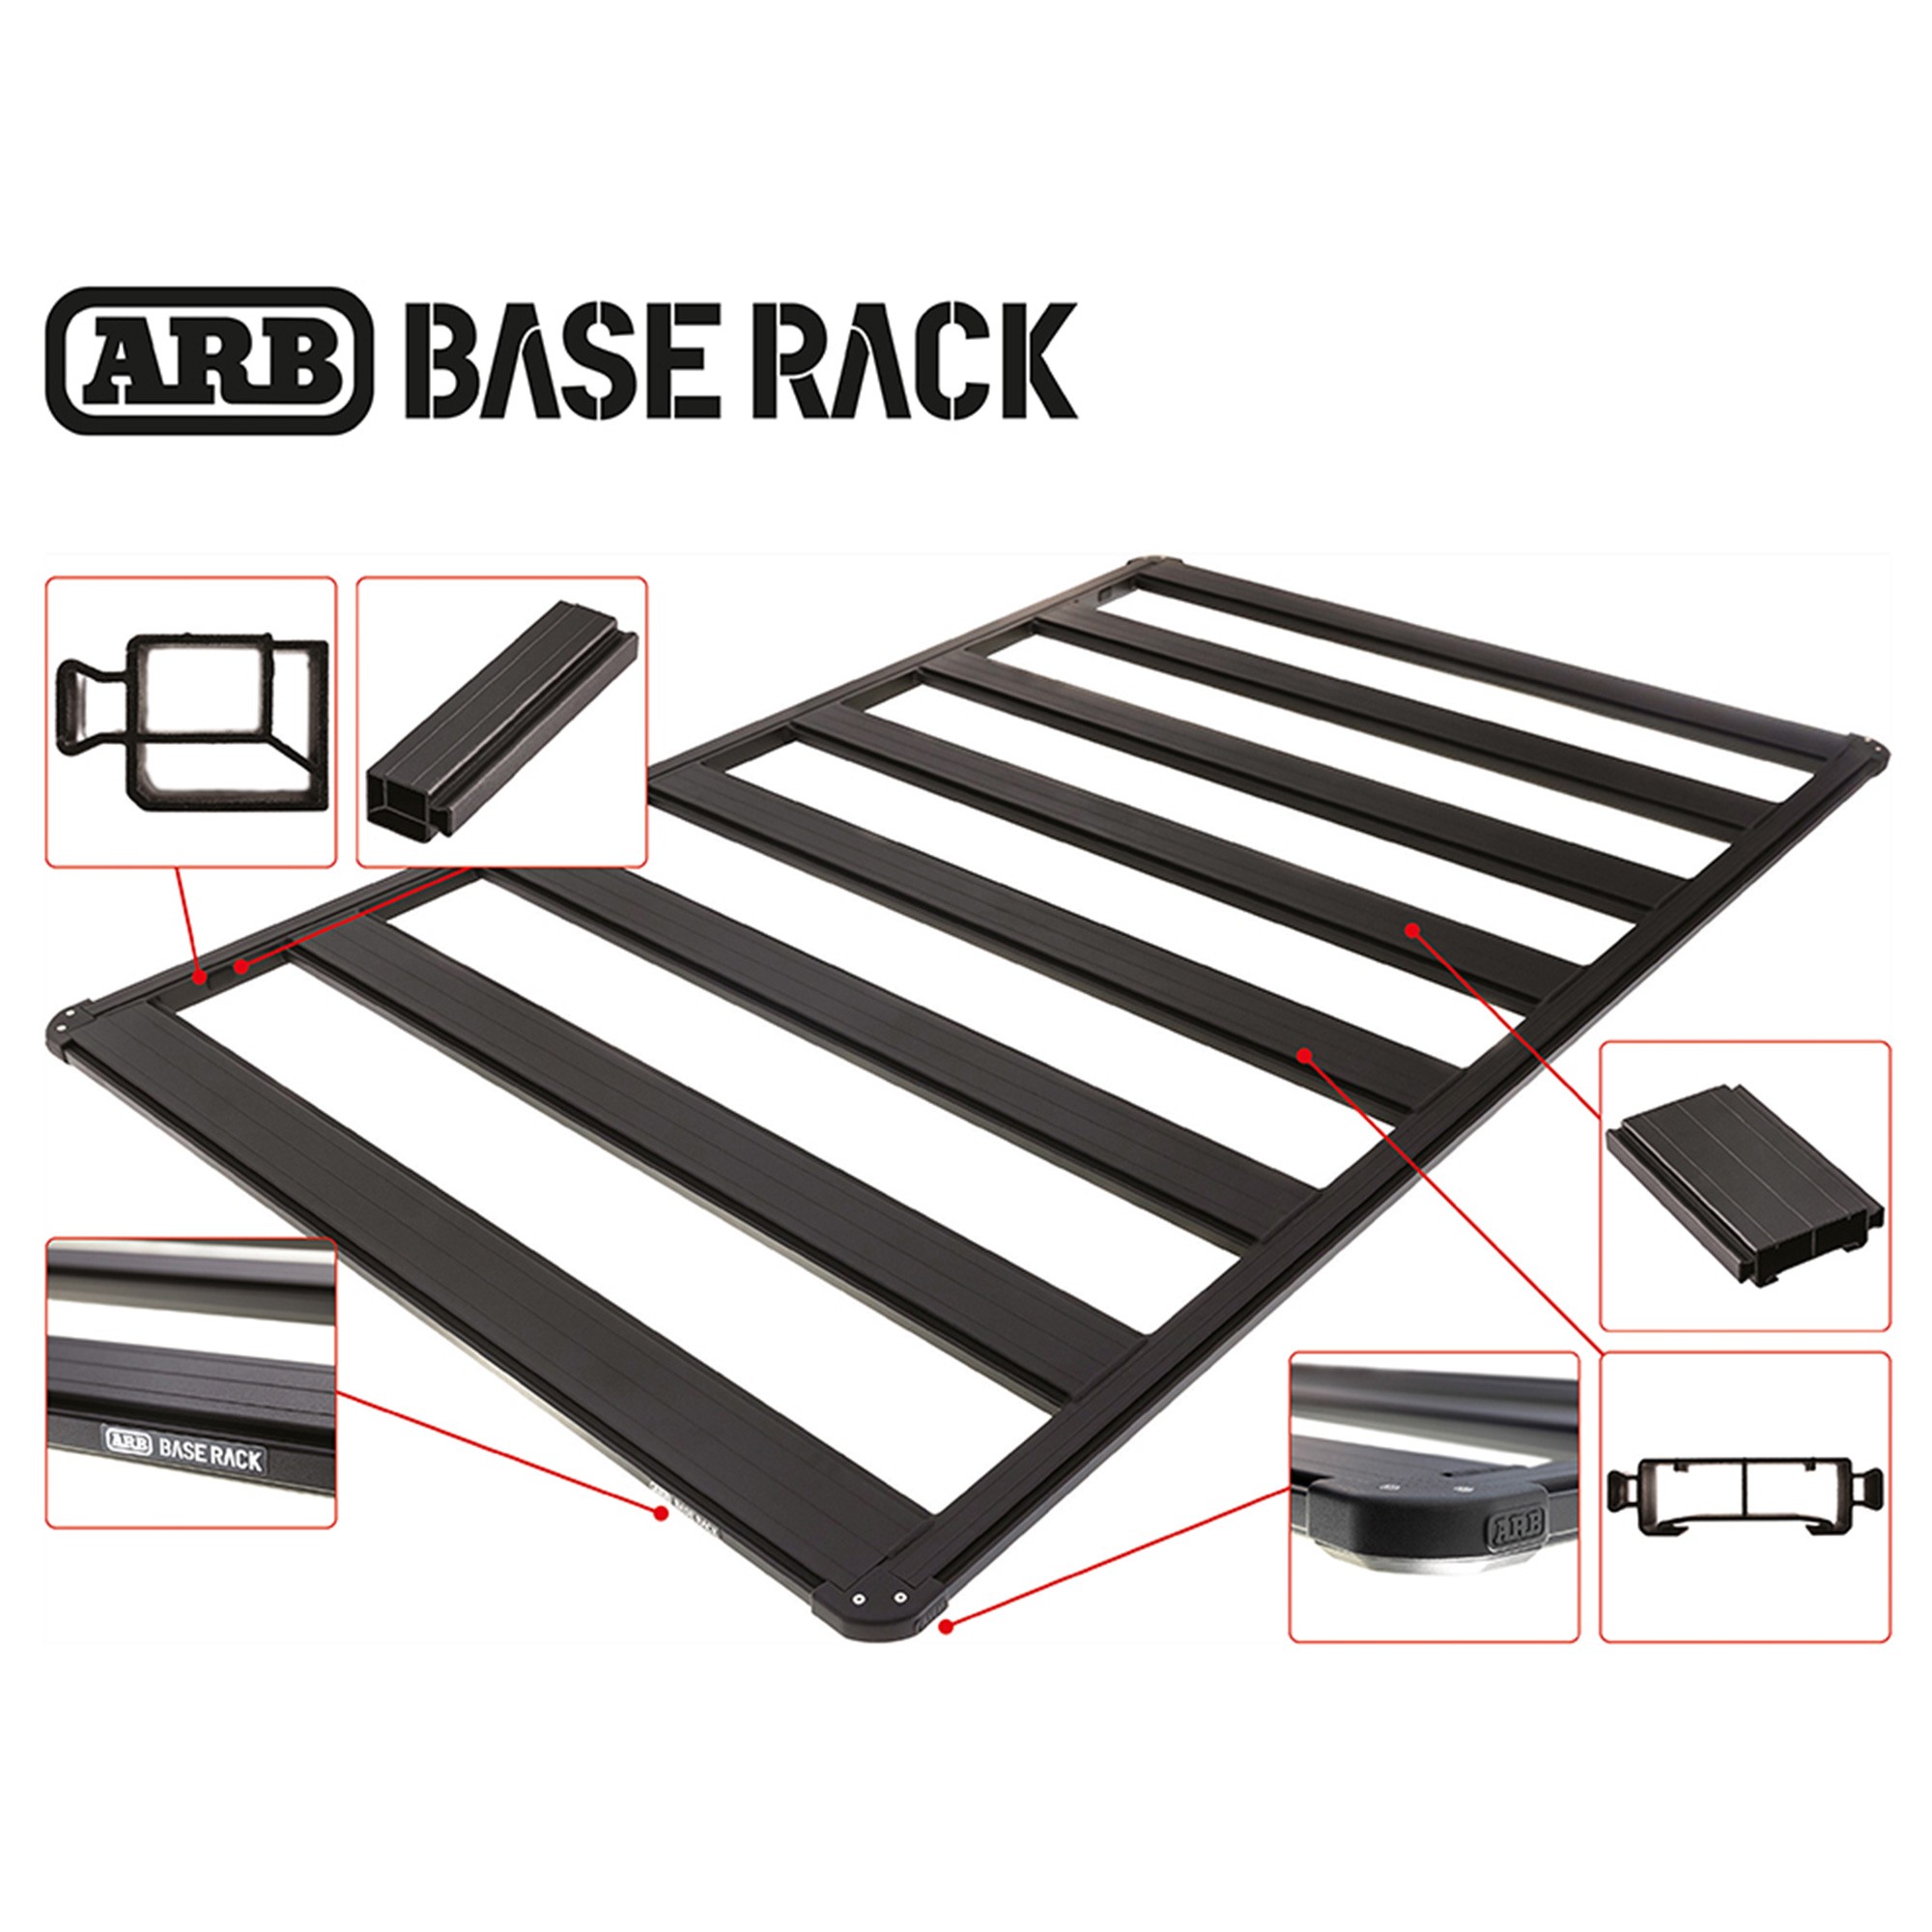 ARB Defender Base Rack 2125x1285mm 8 Beam Requires 17900010 Or 17900050 Base Rack 6 Leg Fitting Kit